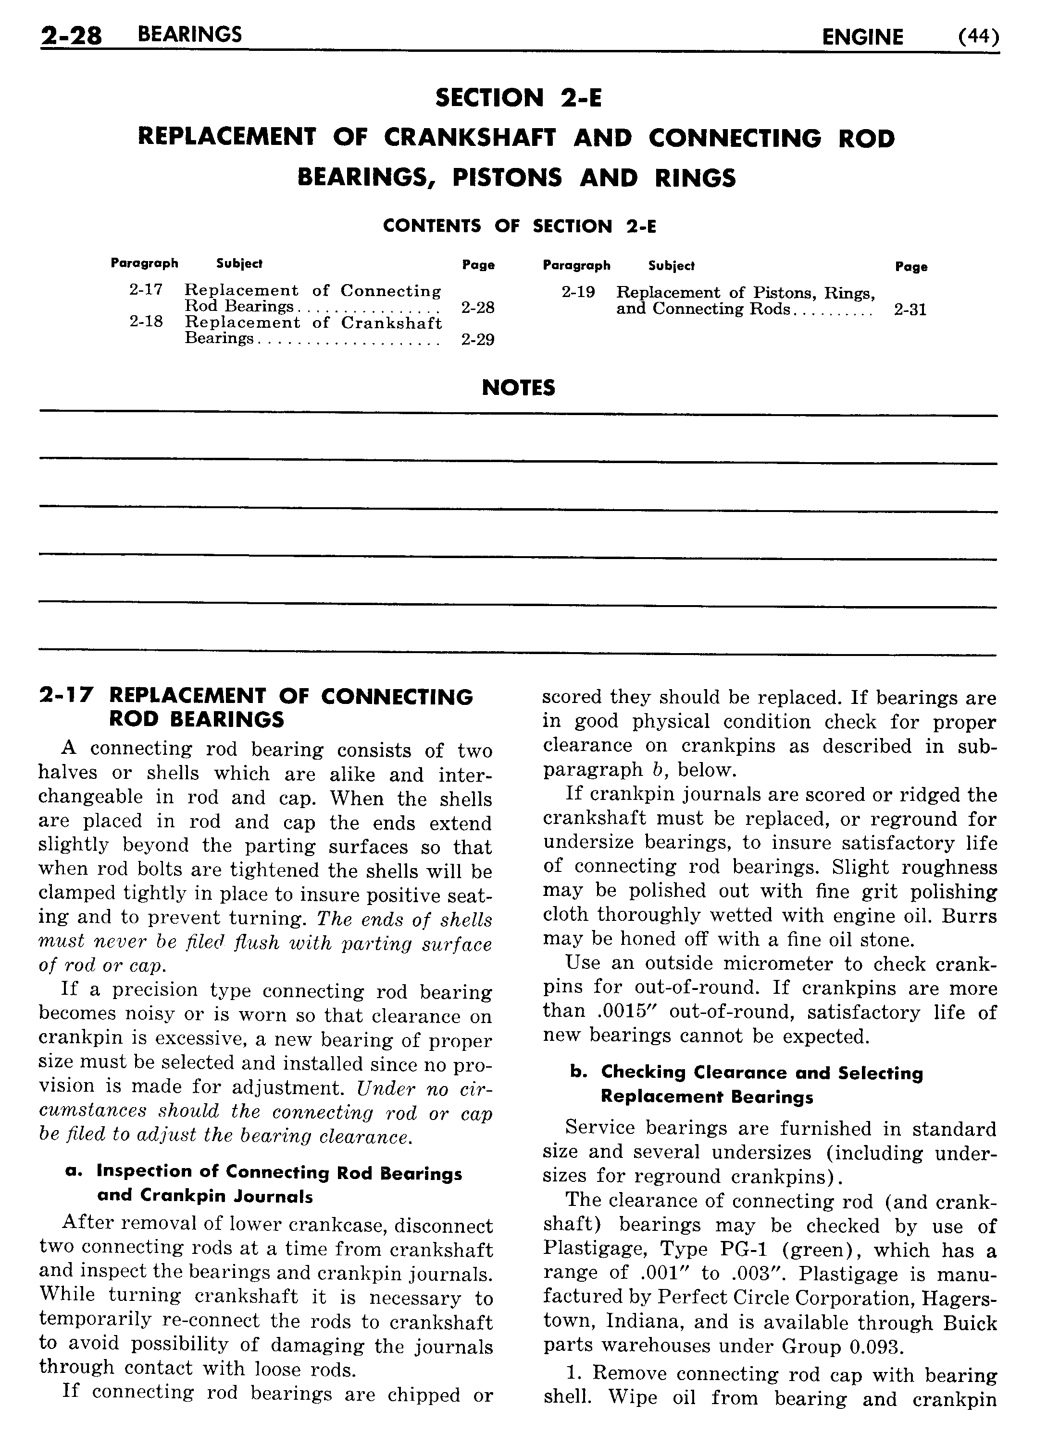 n_03 1956 Buick Shop Manual - Engine-028-028.jpg